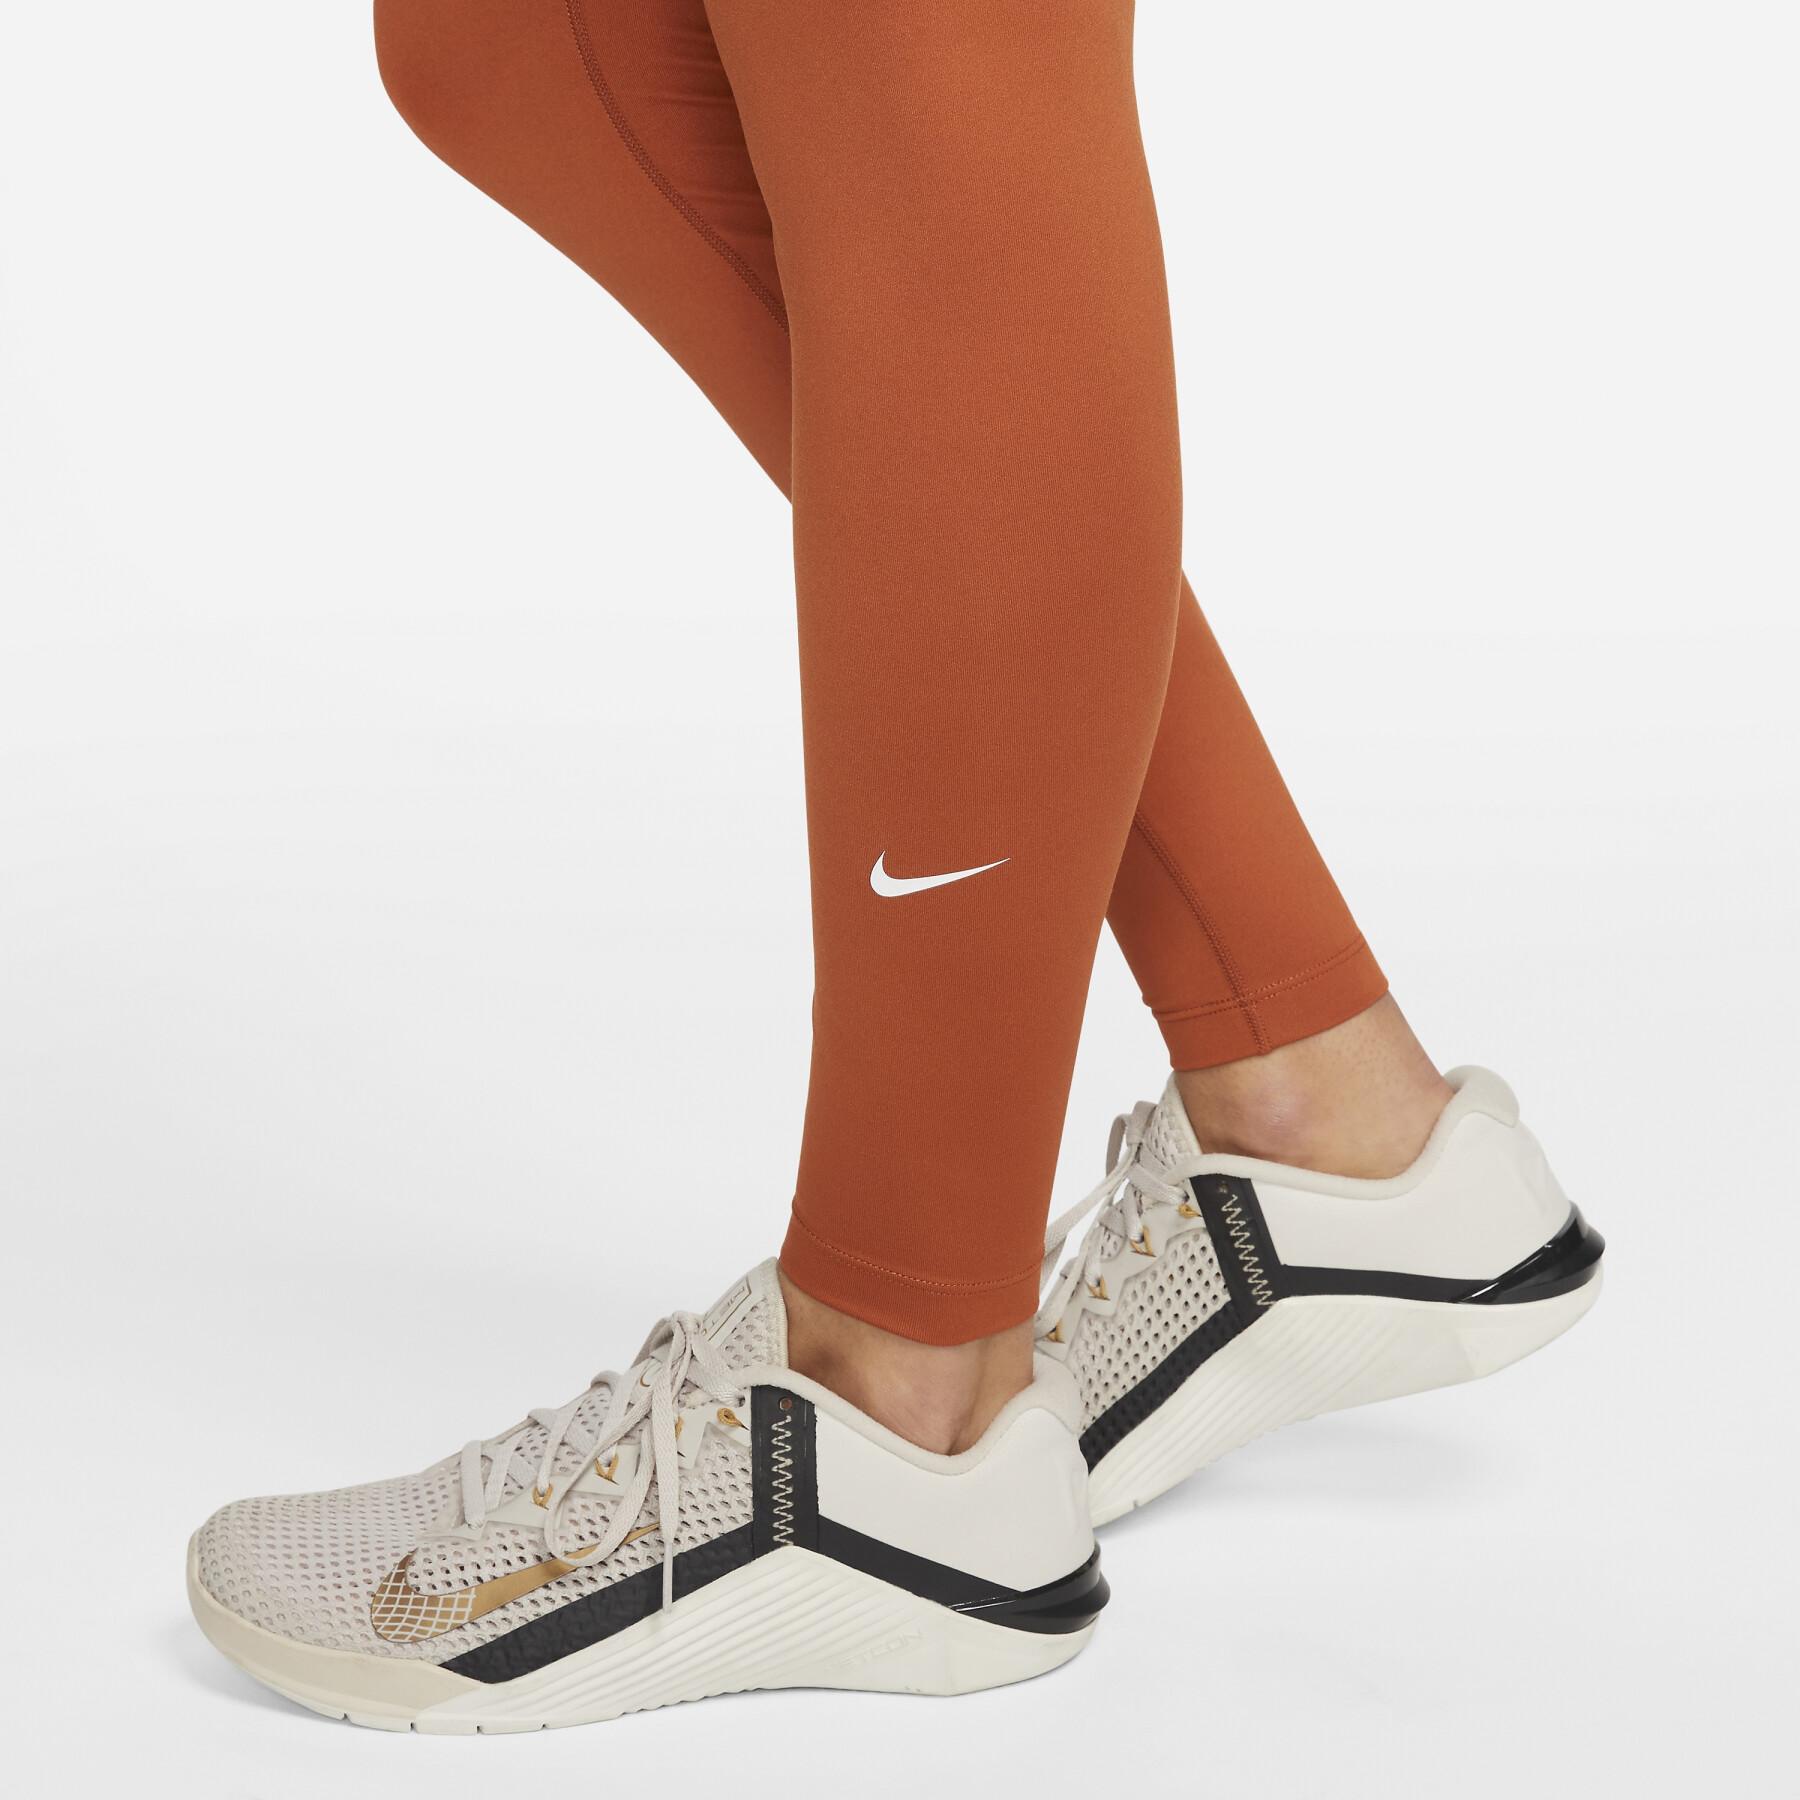 Legging Frau Nike One